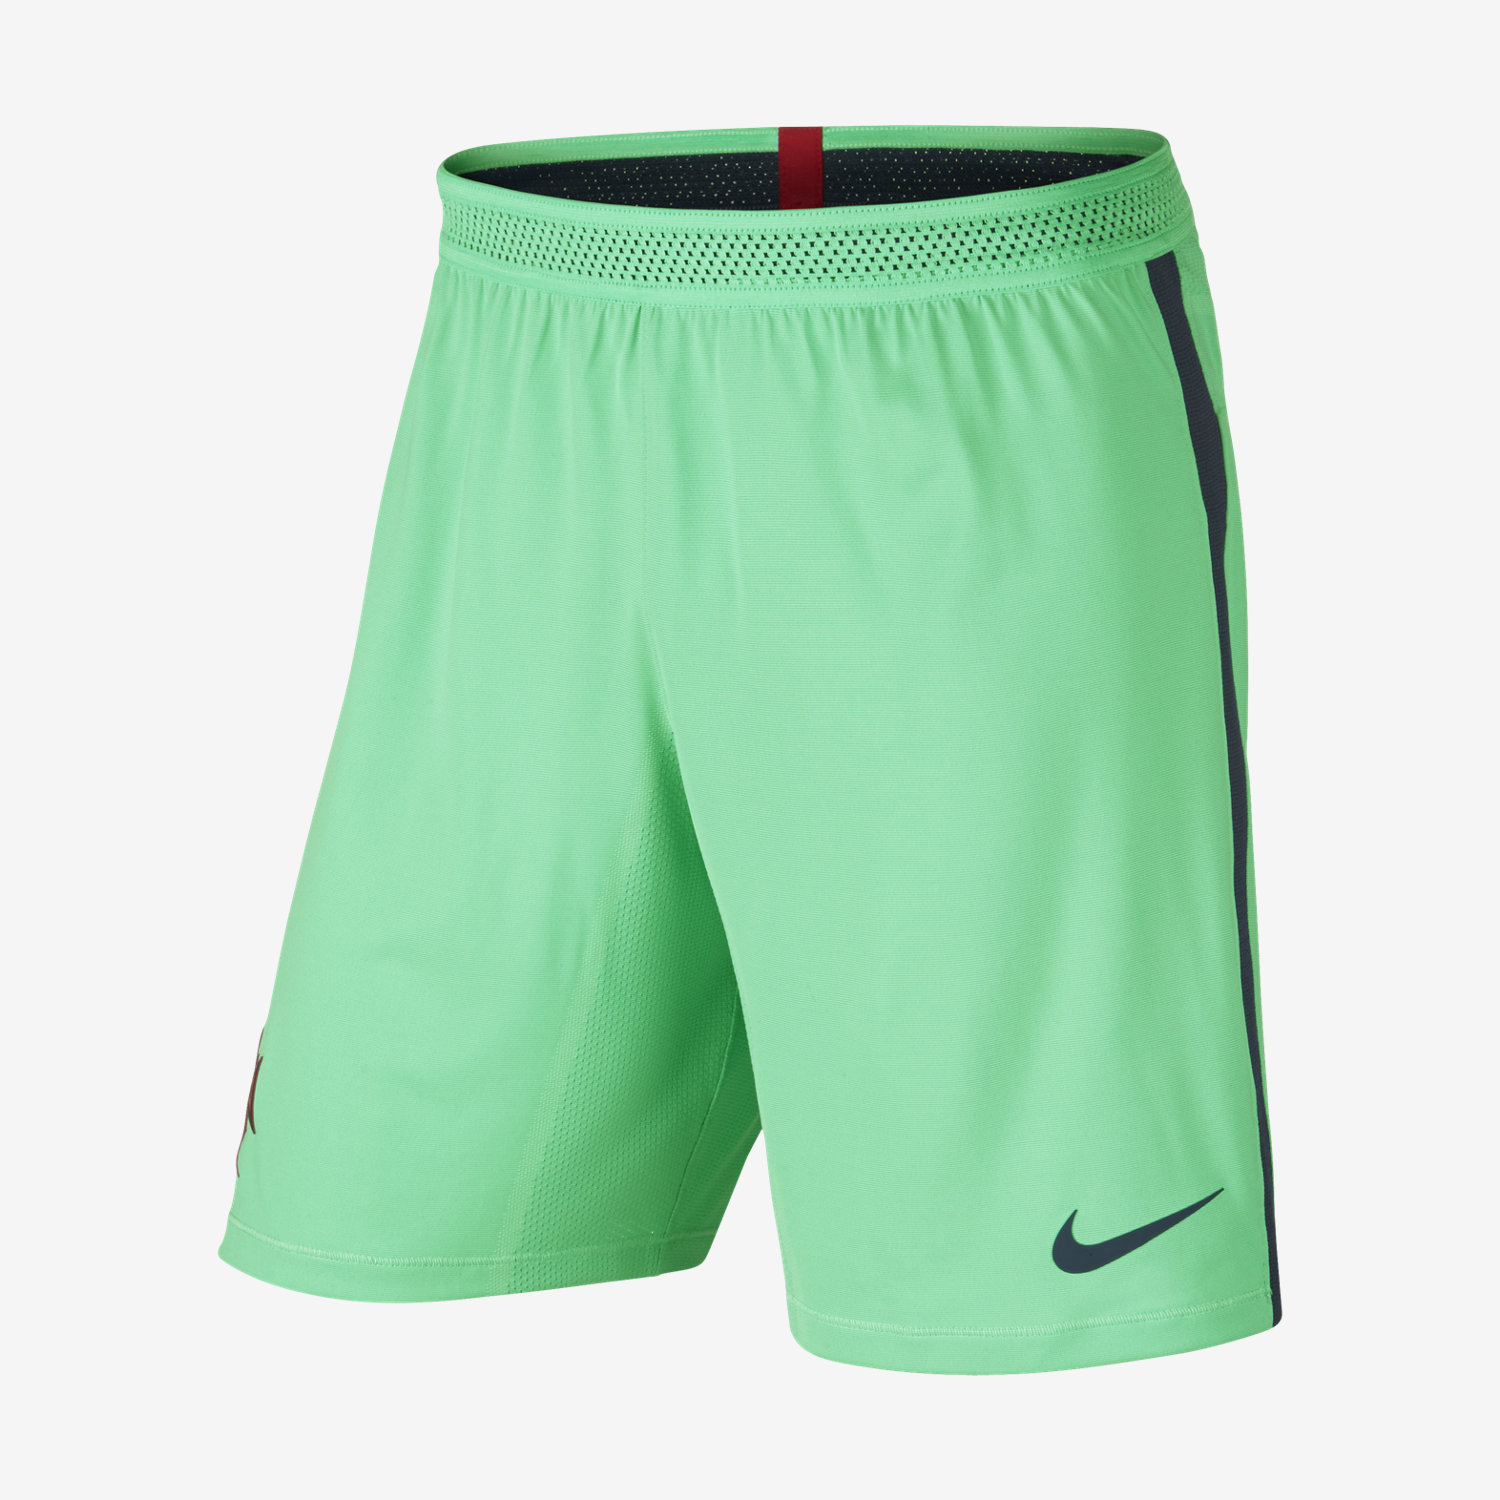 Nike Portugal Vapor Match Home/Away - Men's Football Shorts